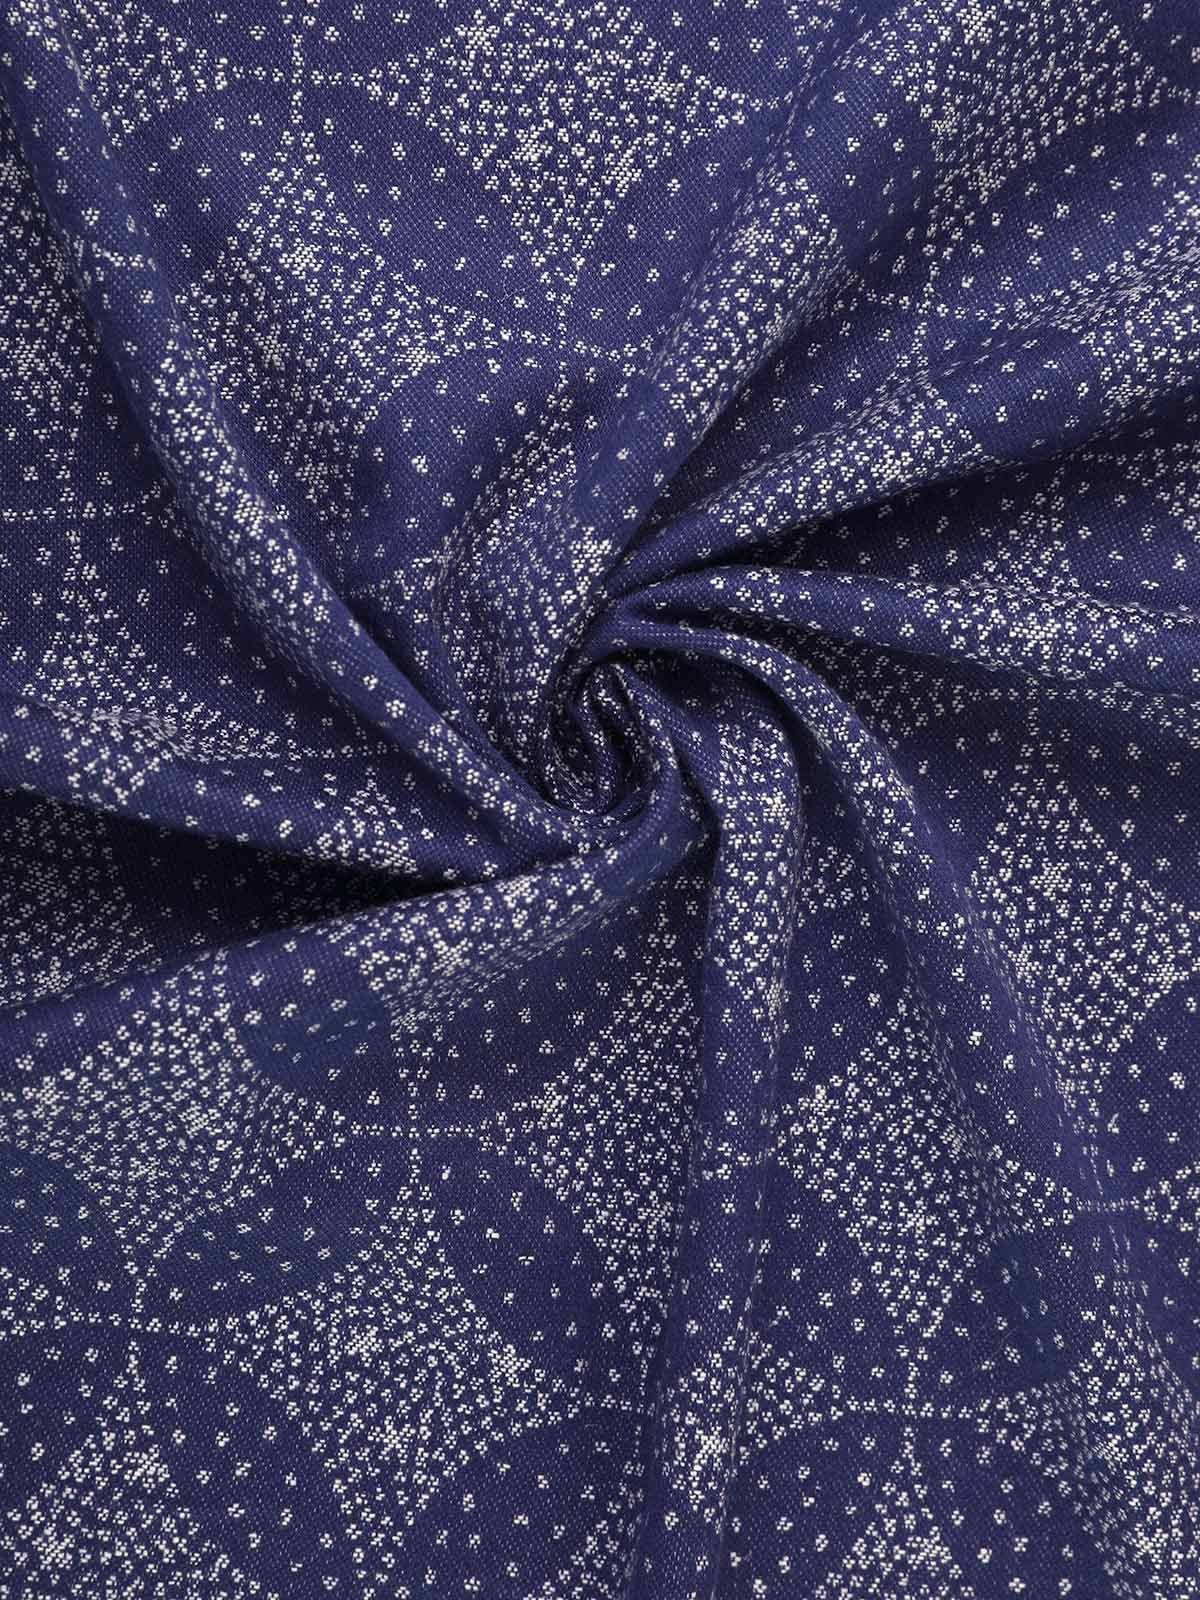 Starry Night Nebula Baby Wrap